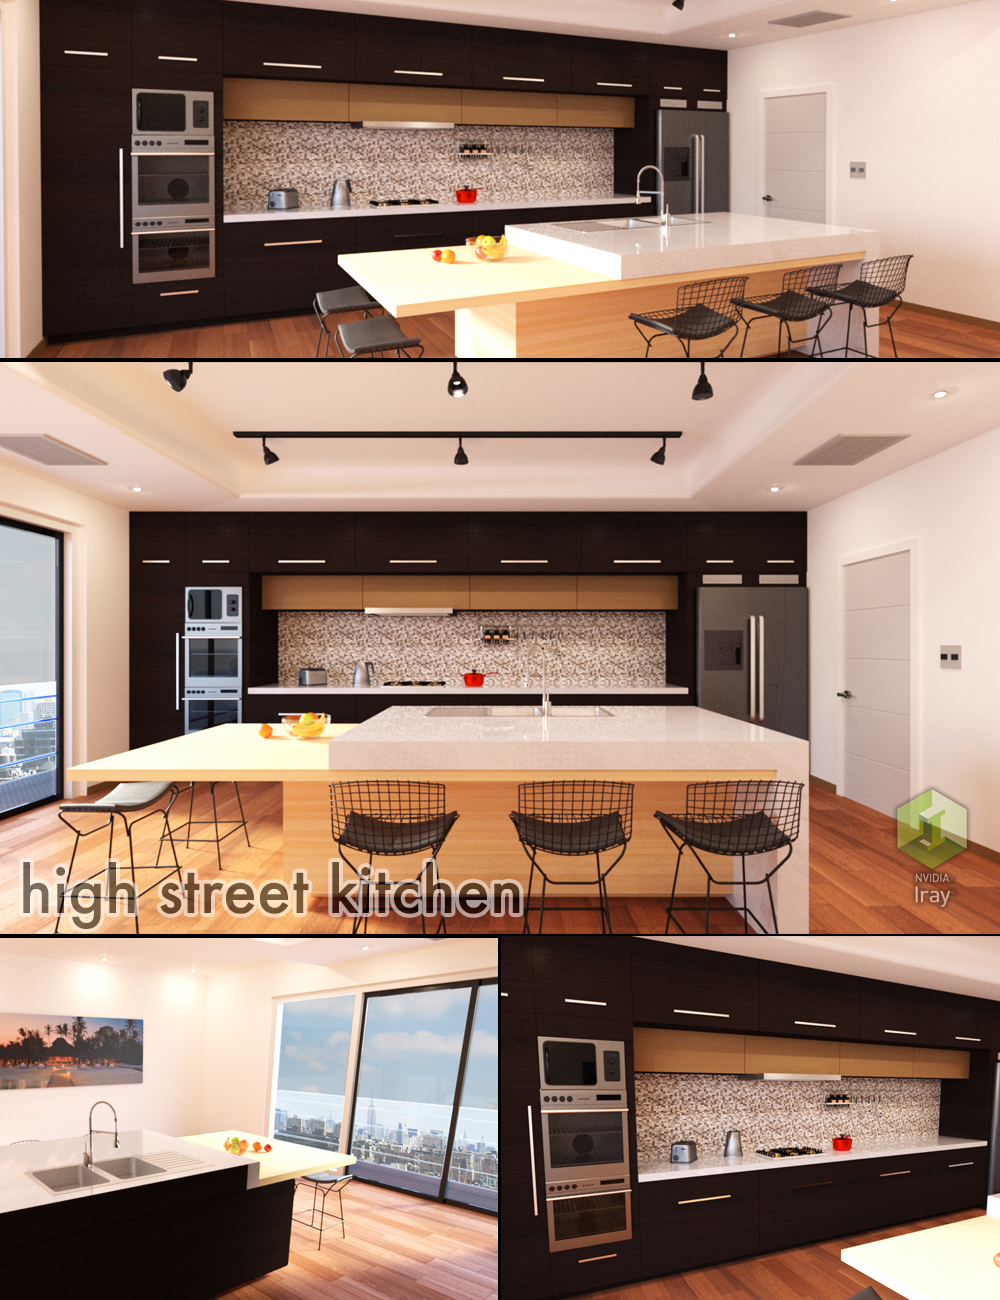 High Street Kitchen by: Tesla3dCorp, 3D Models by Daz 3D